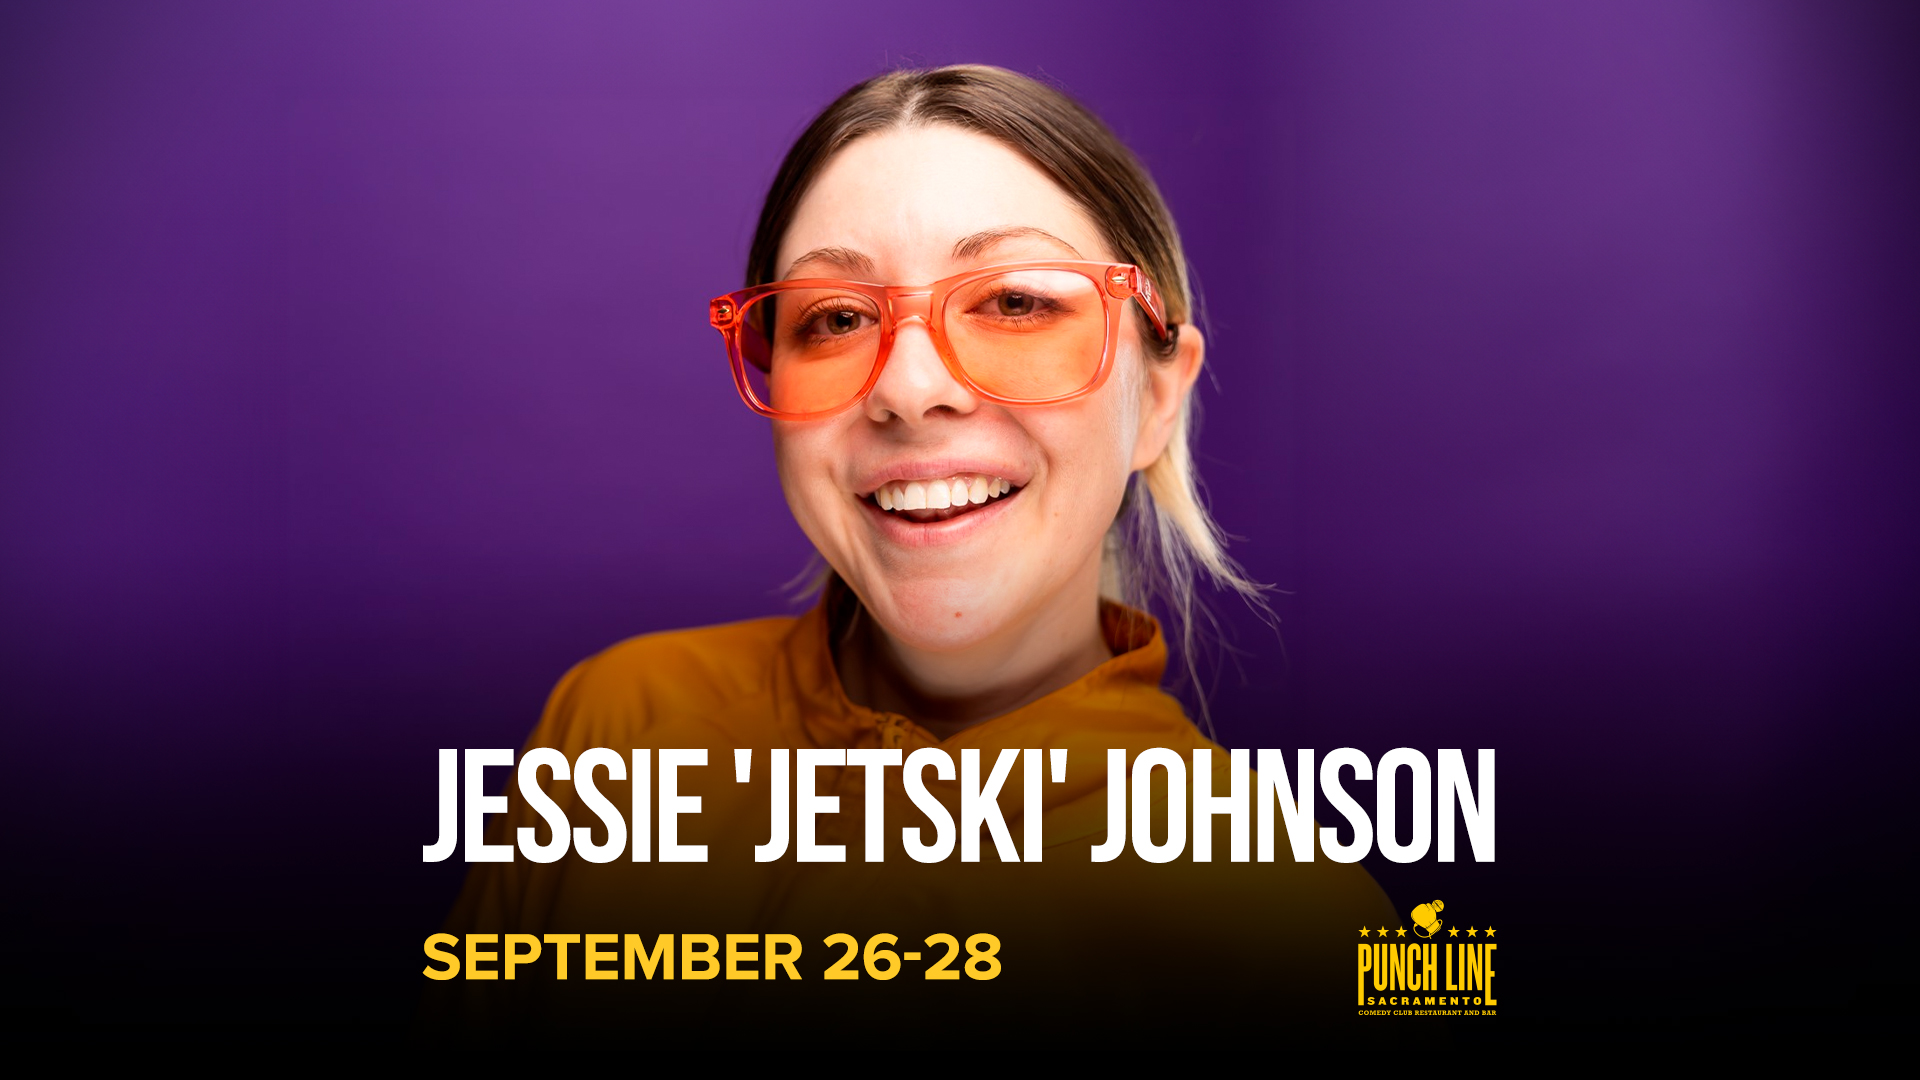 Jessie "Jetski" Johnson